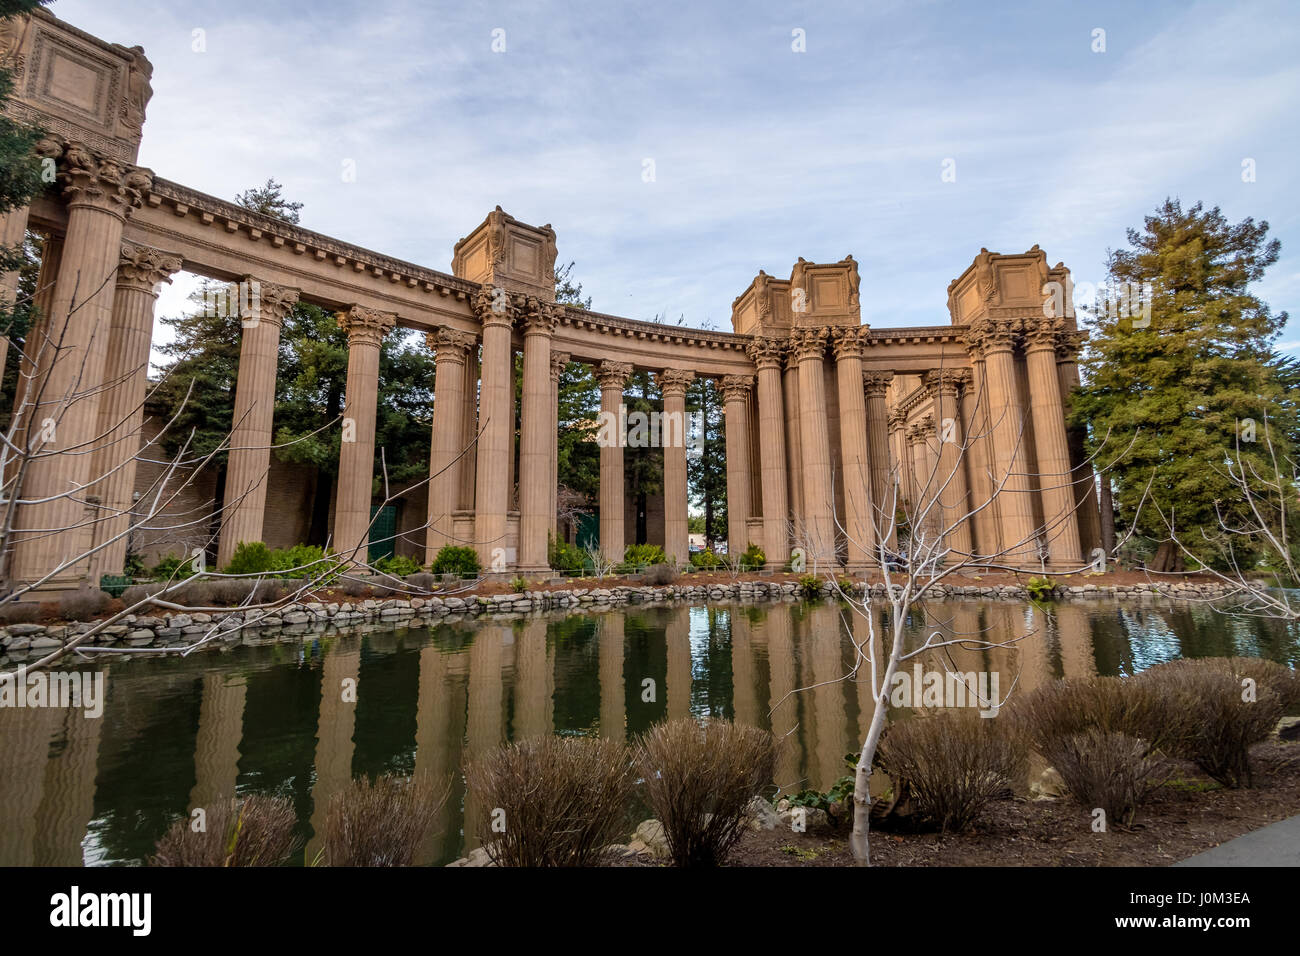 Columns of the Palace of Fine Arts - San Francisco, California, USA Stock Photo